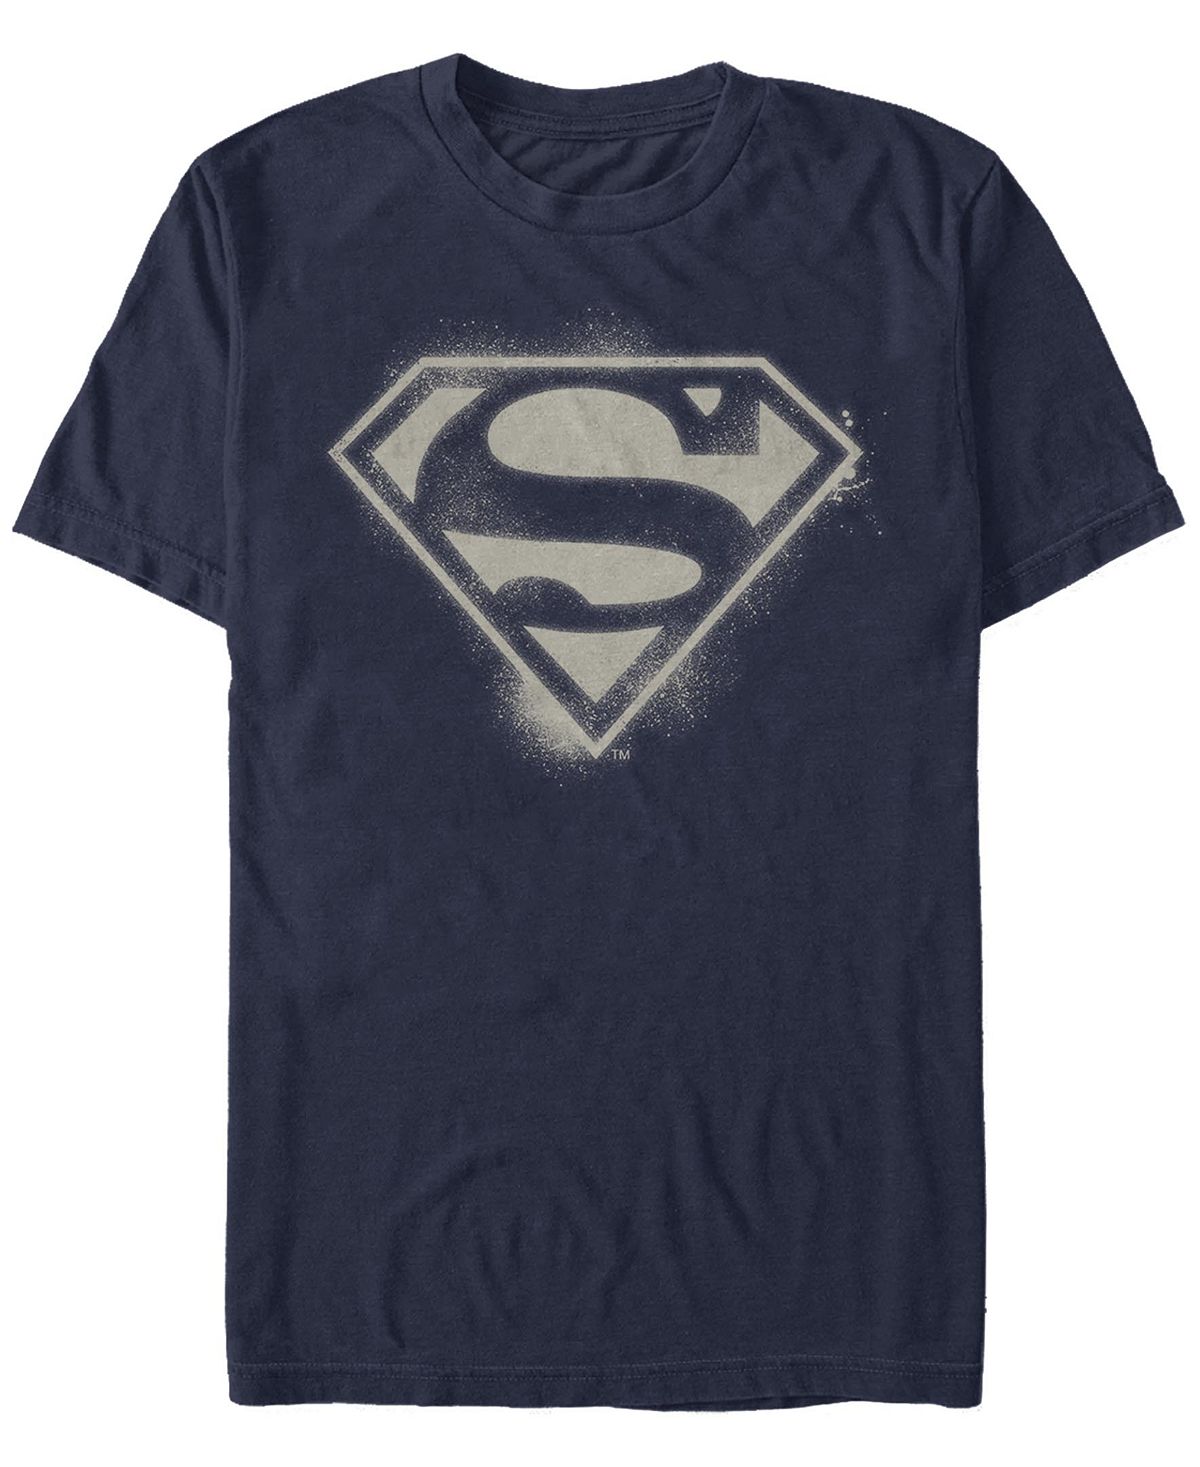 Мужская футболка с коротким рукавом и логотипом superman spray logo Fifth Sun, синий цена и фото